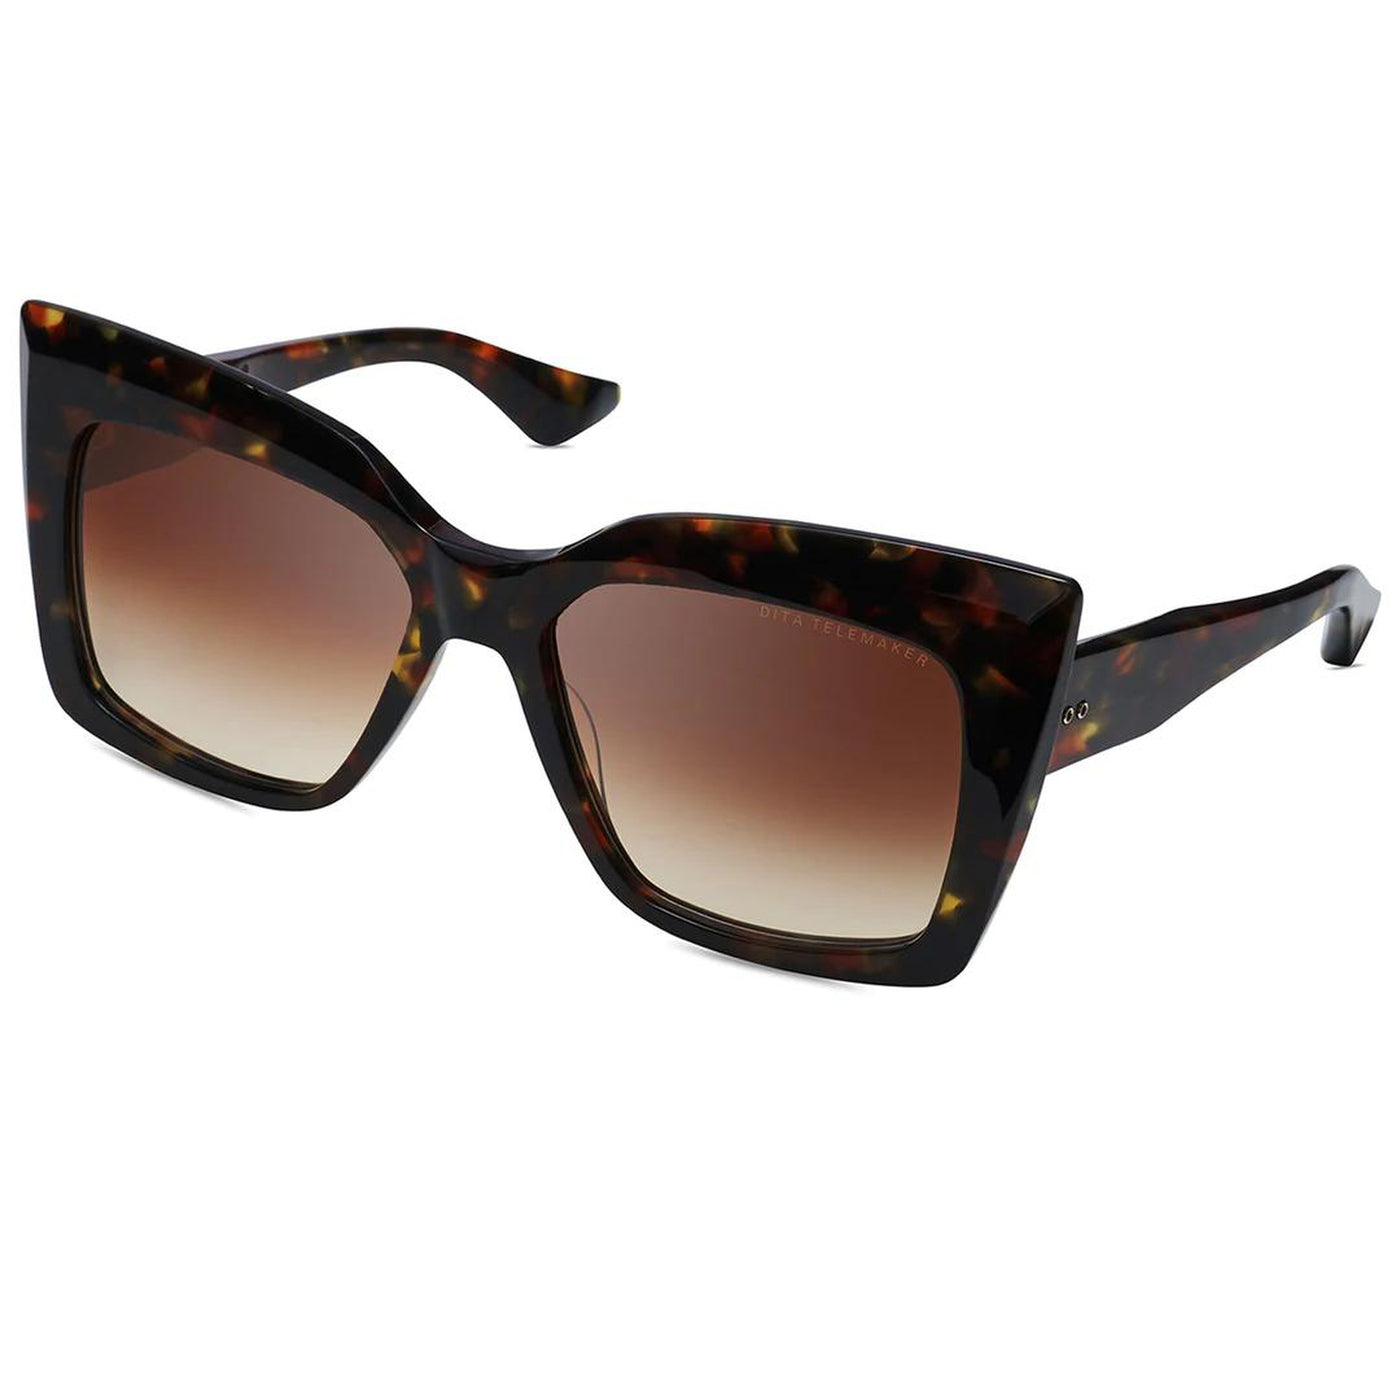 DITA TELEMAKER-Sunglasses-Topline Eyewear